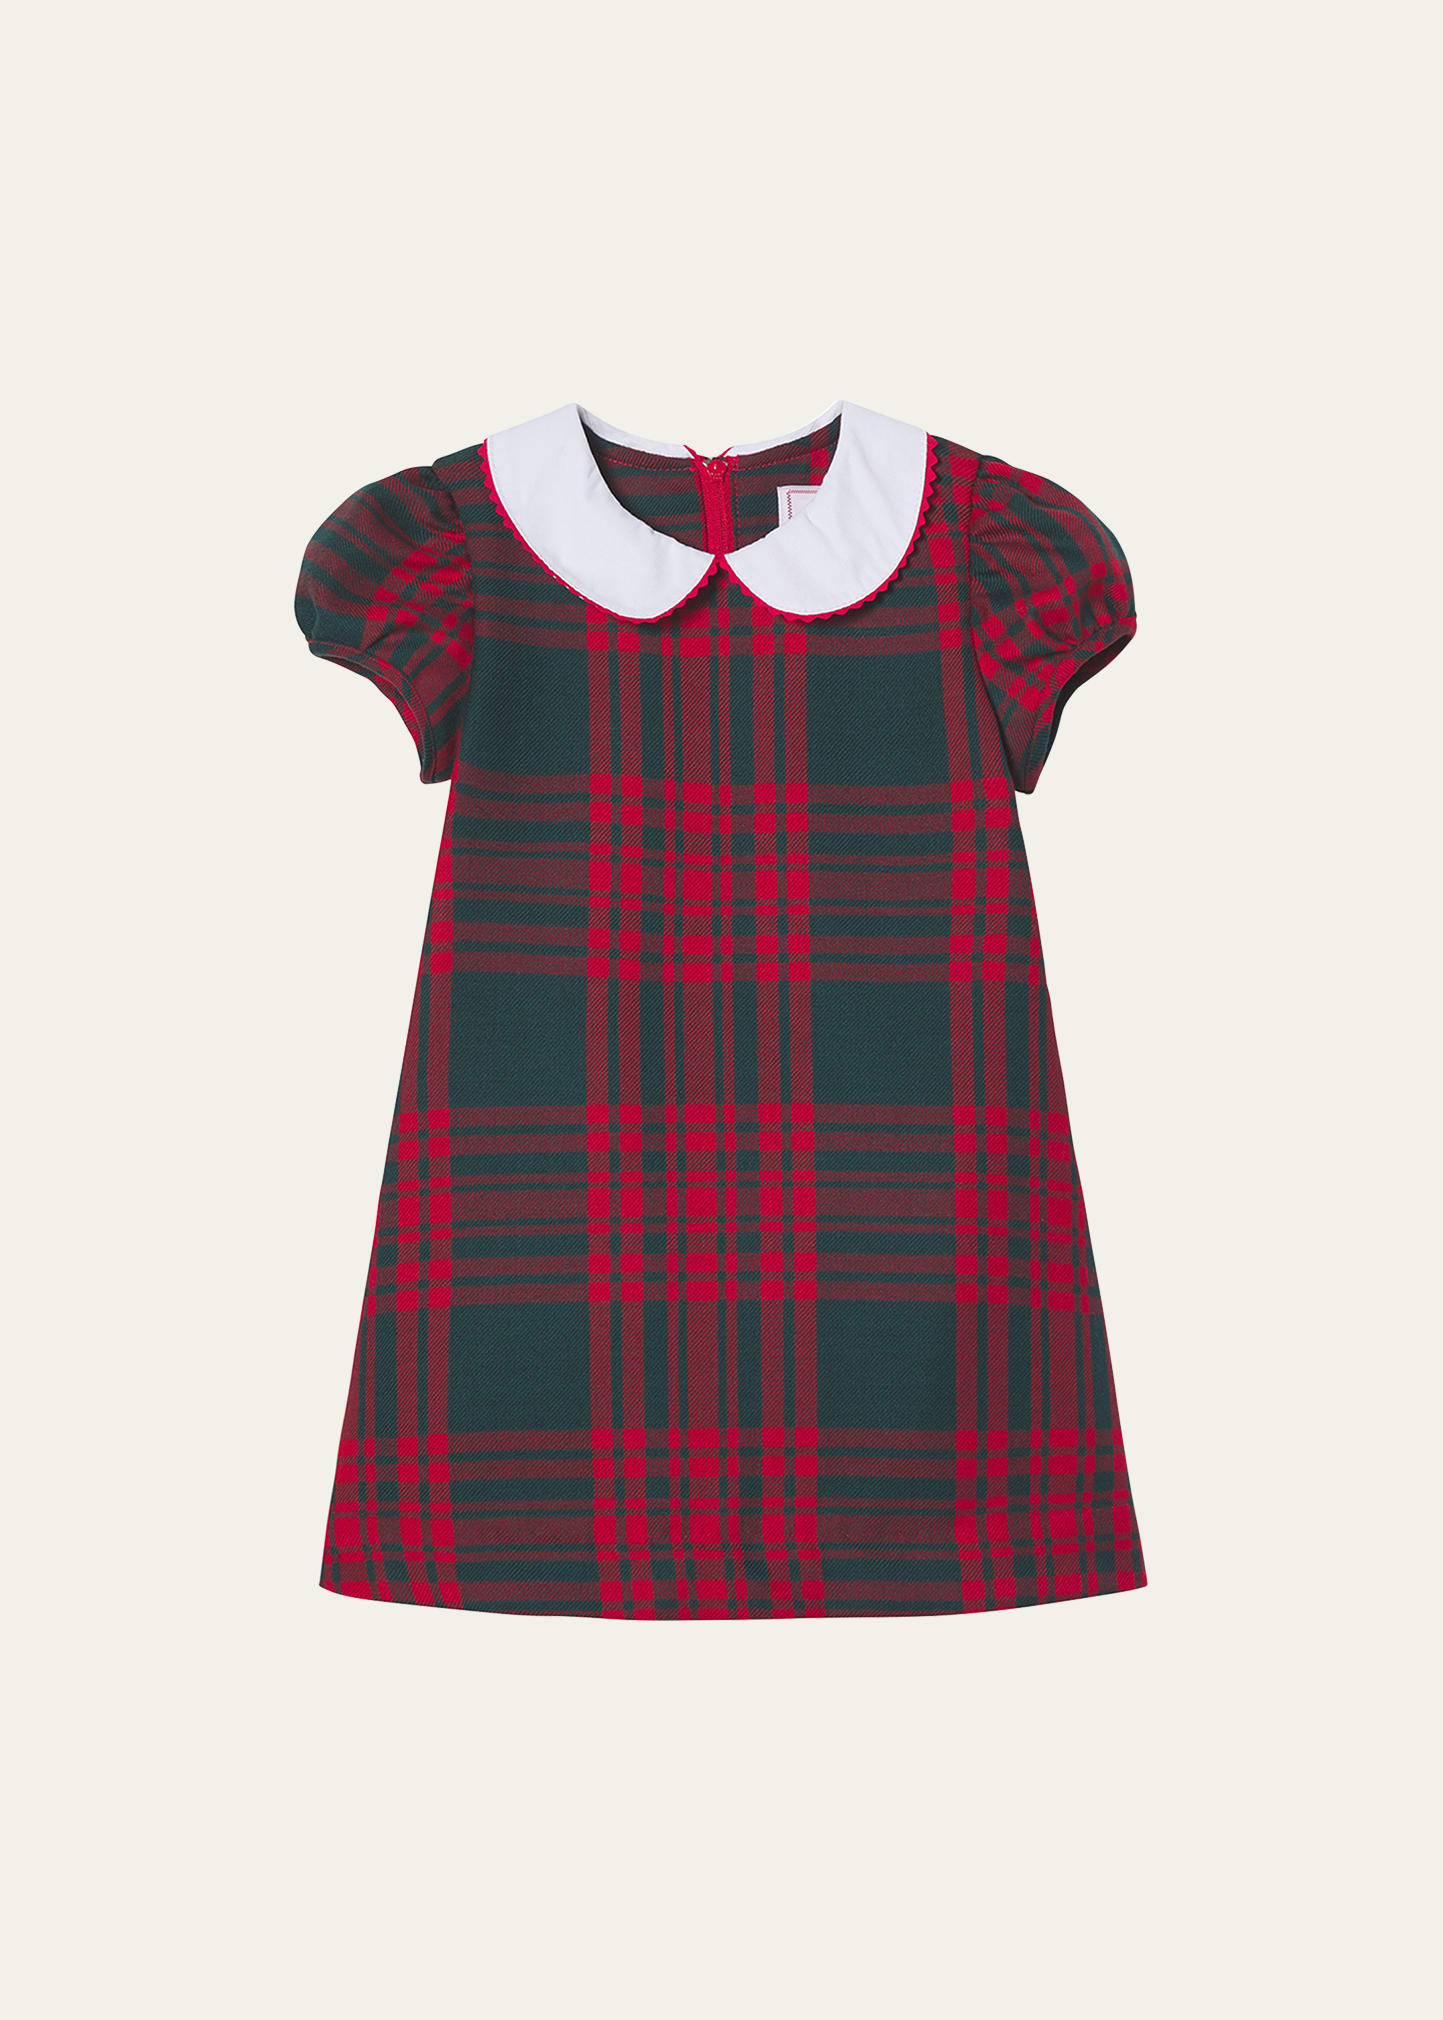 Girl's Paige Tartan-Print Dress, Size 6M-8